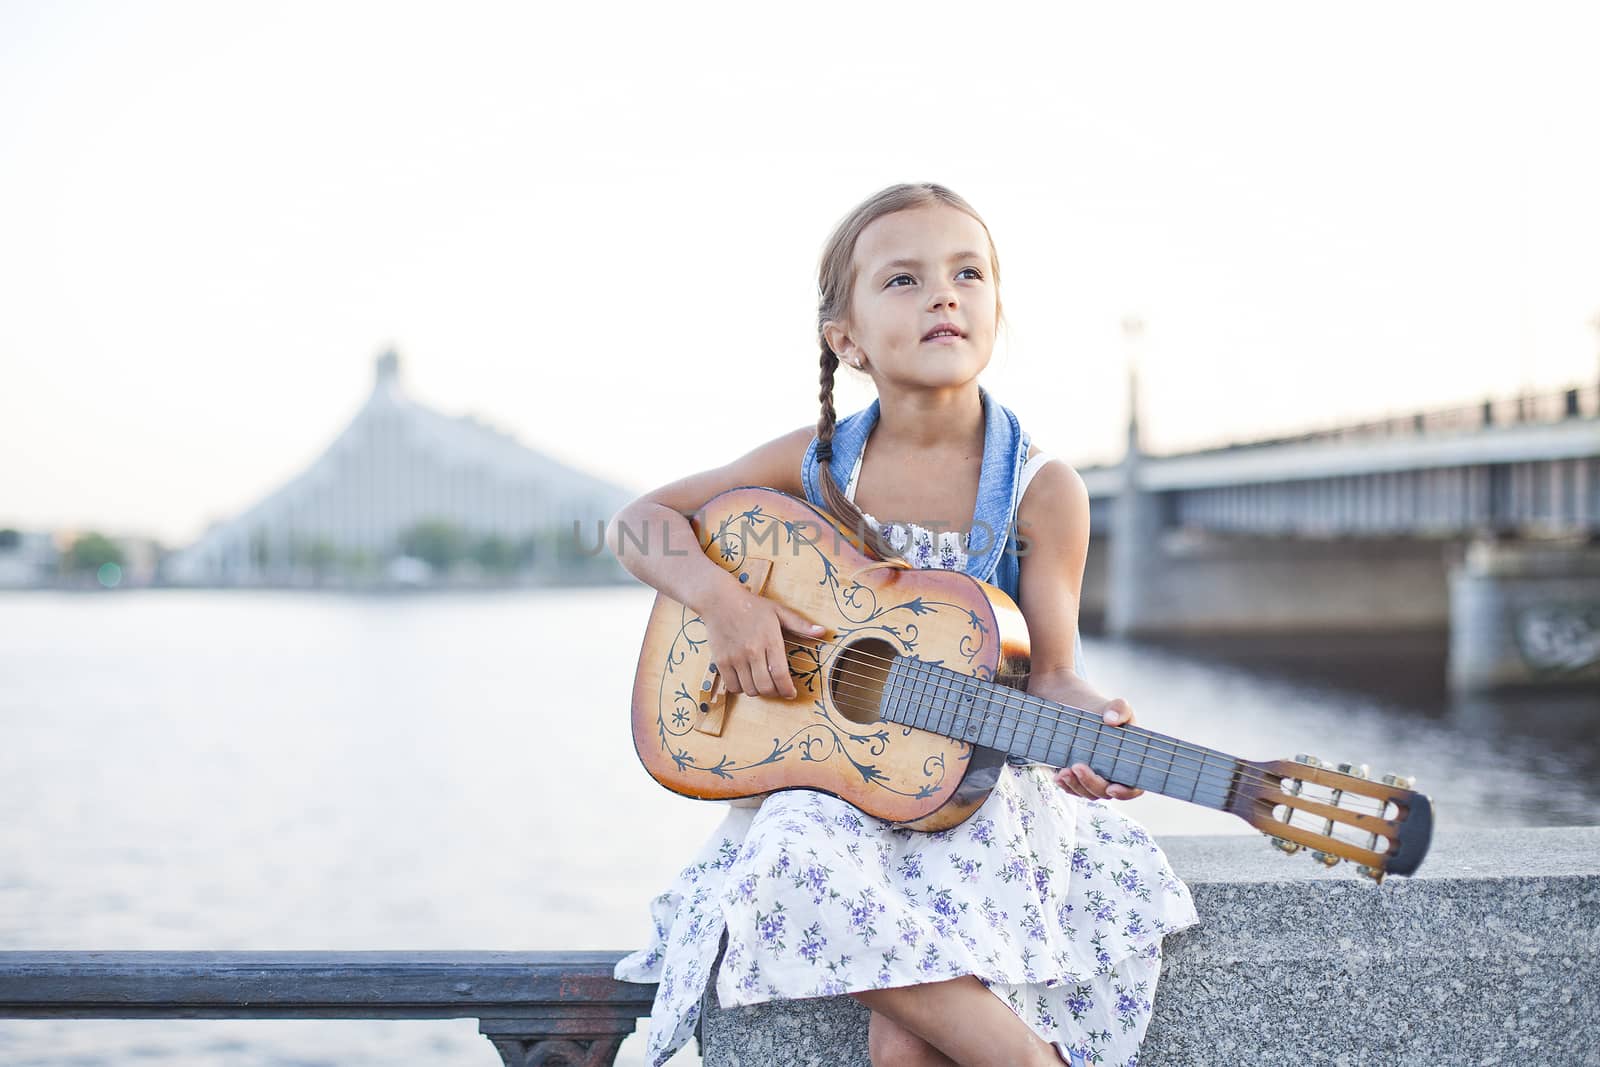 Girl playing guitar on river embankment by Kor